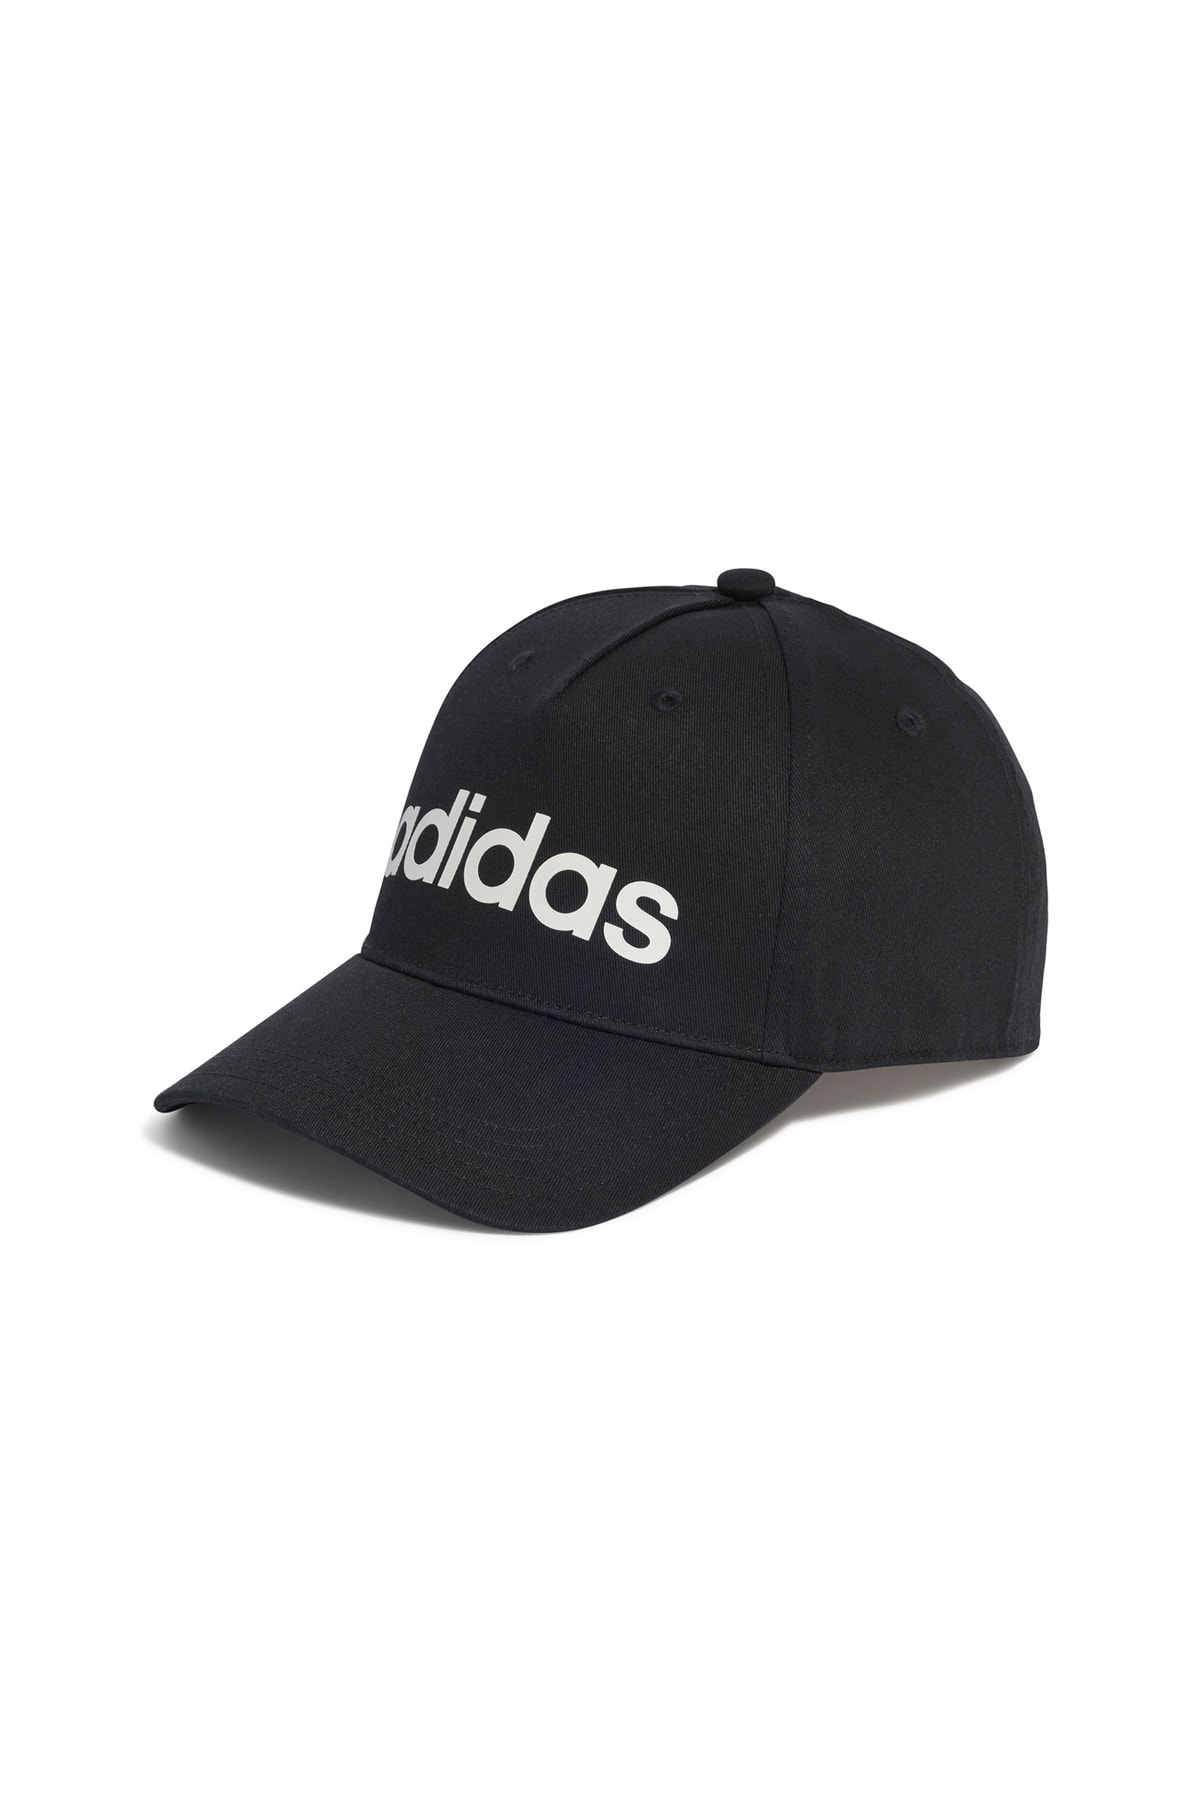 adidas کلاه یونیسکس سیاه - سفید Ht6356 Daily Cap